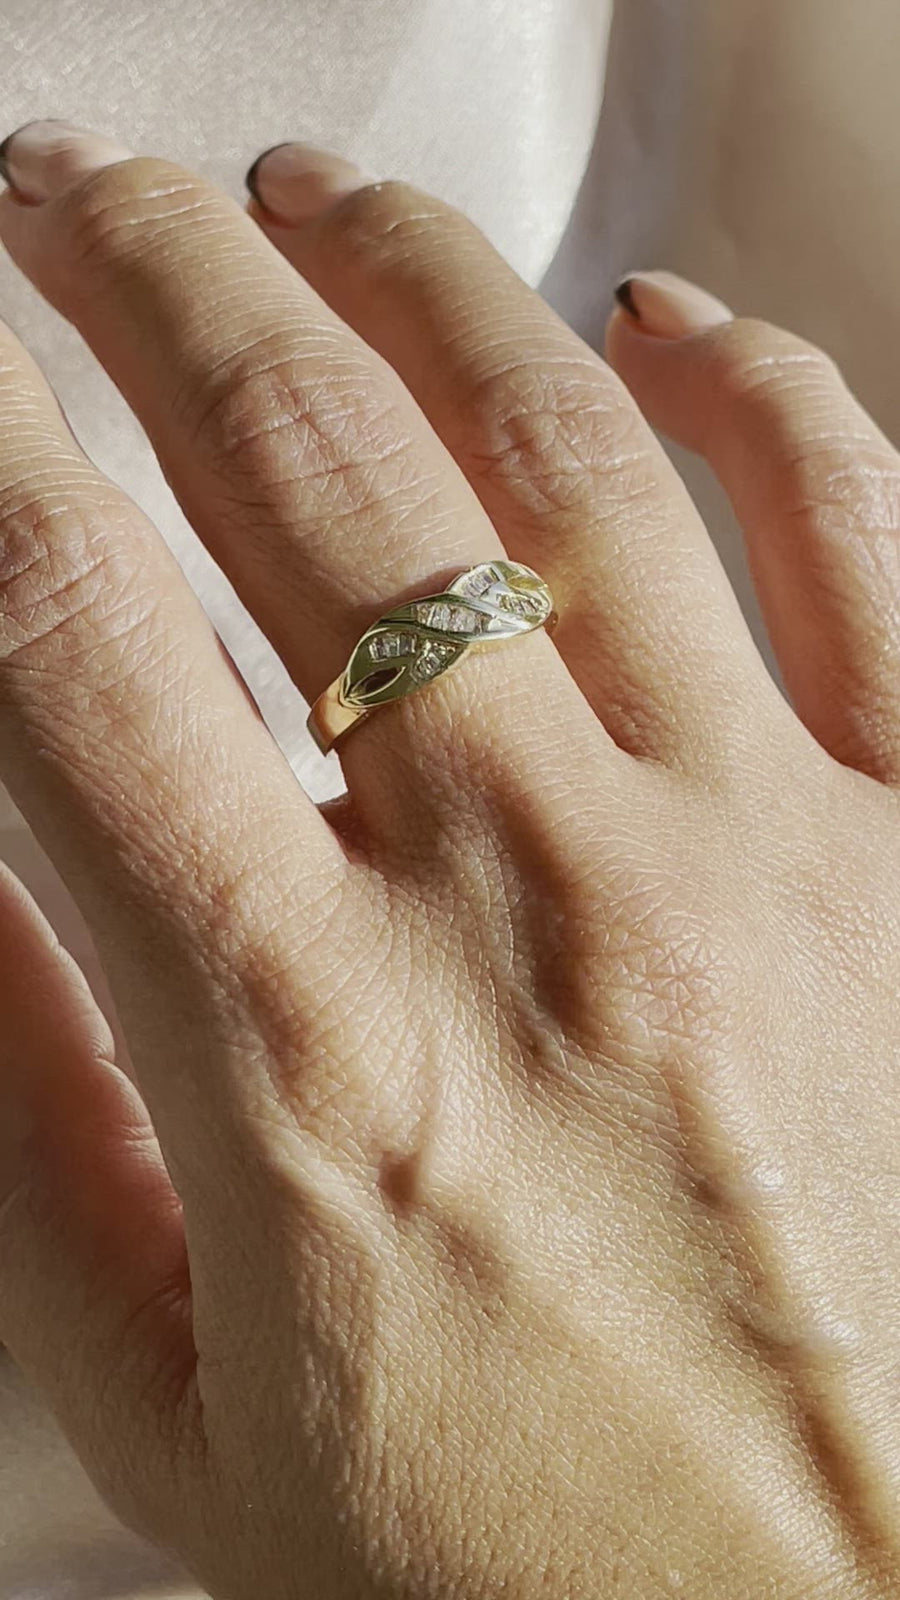 Video of Vintage 14k Yellow Gold .33ctw Baguette Diamond Ribbon-Style Infinity Symbol Ring Alternative Bridal Anniversary Gift Idea on Hand